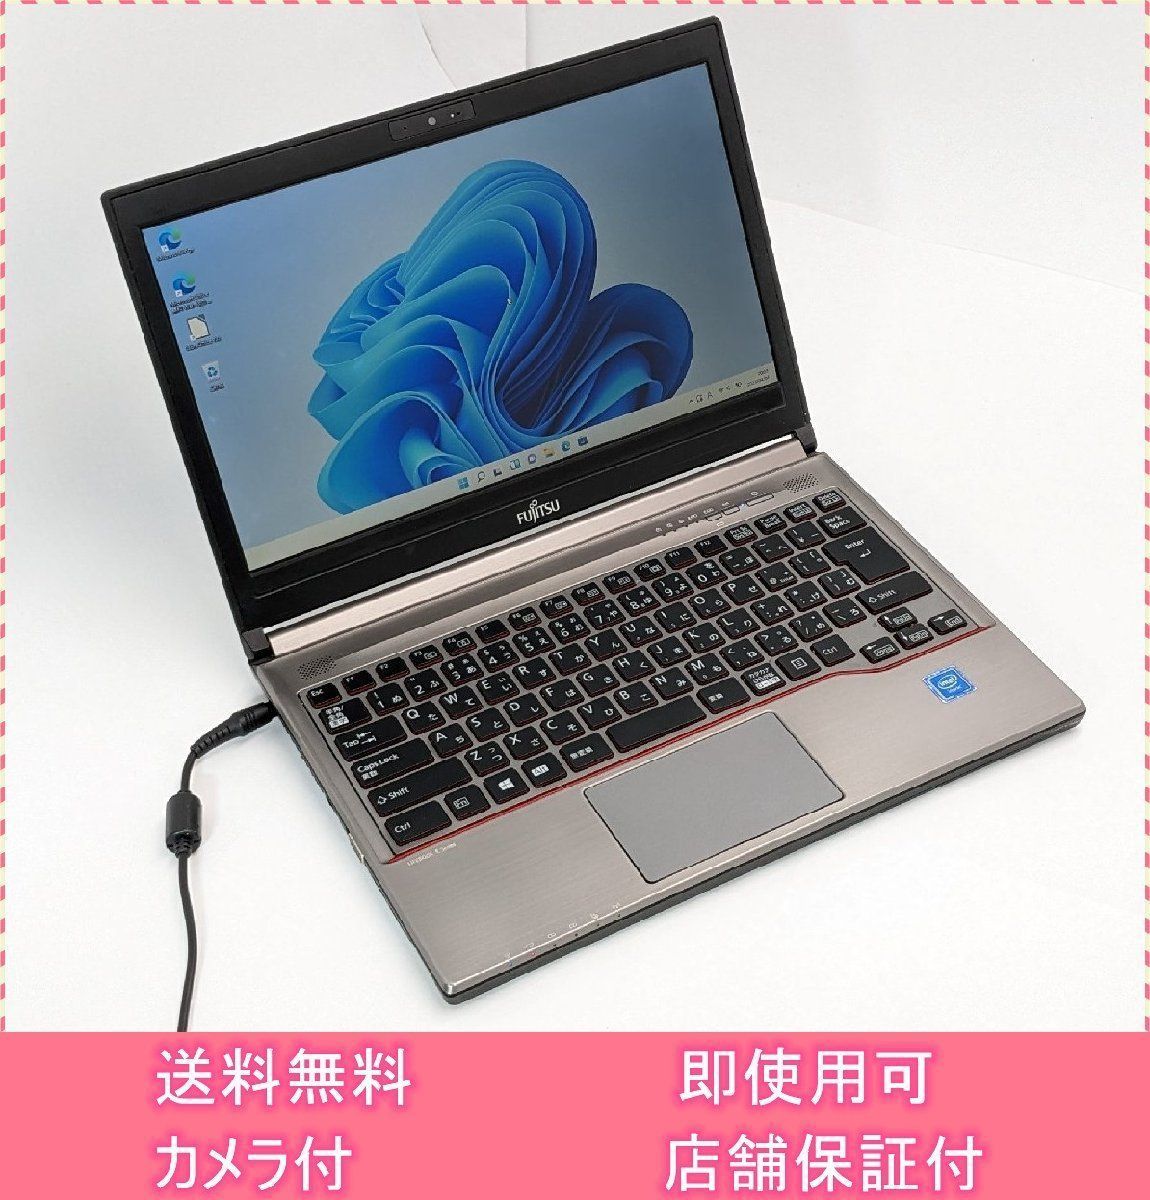 激安価格 在庫一掃セール 送料無料 新品SSD 日本製 13.3型 ノートPC